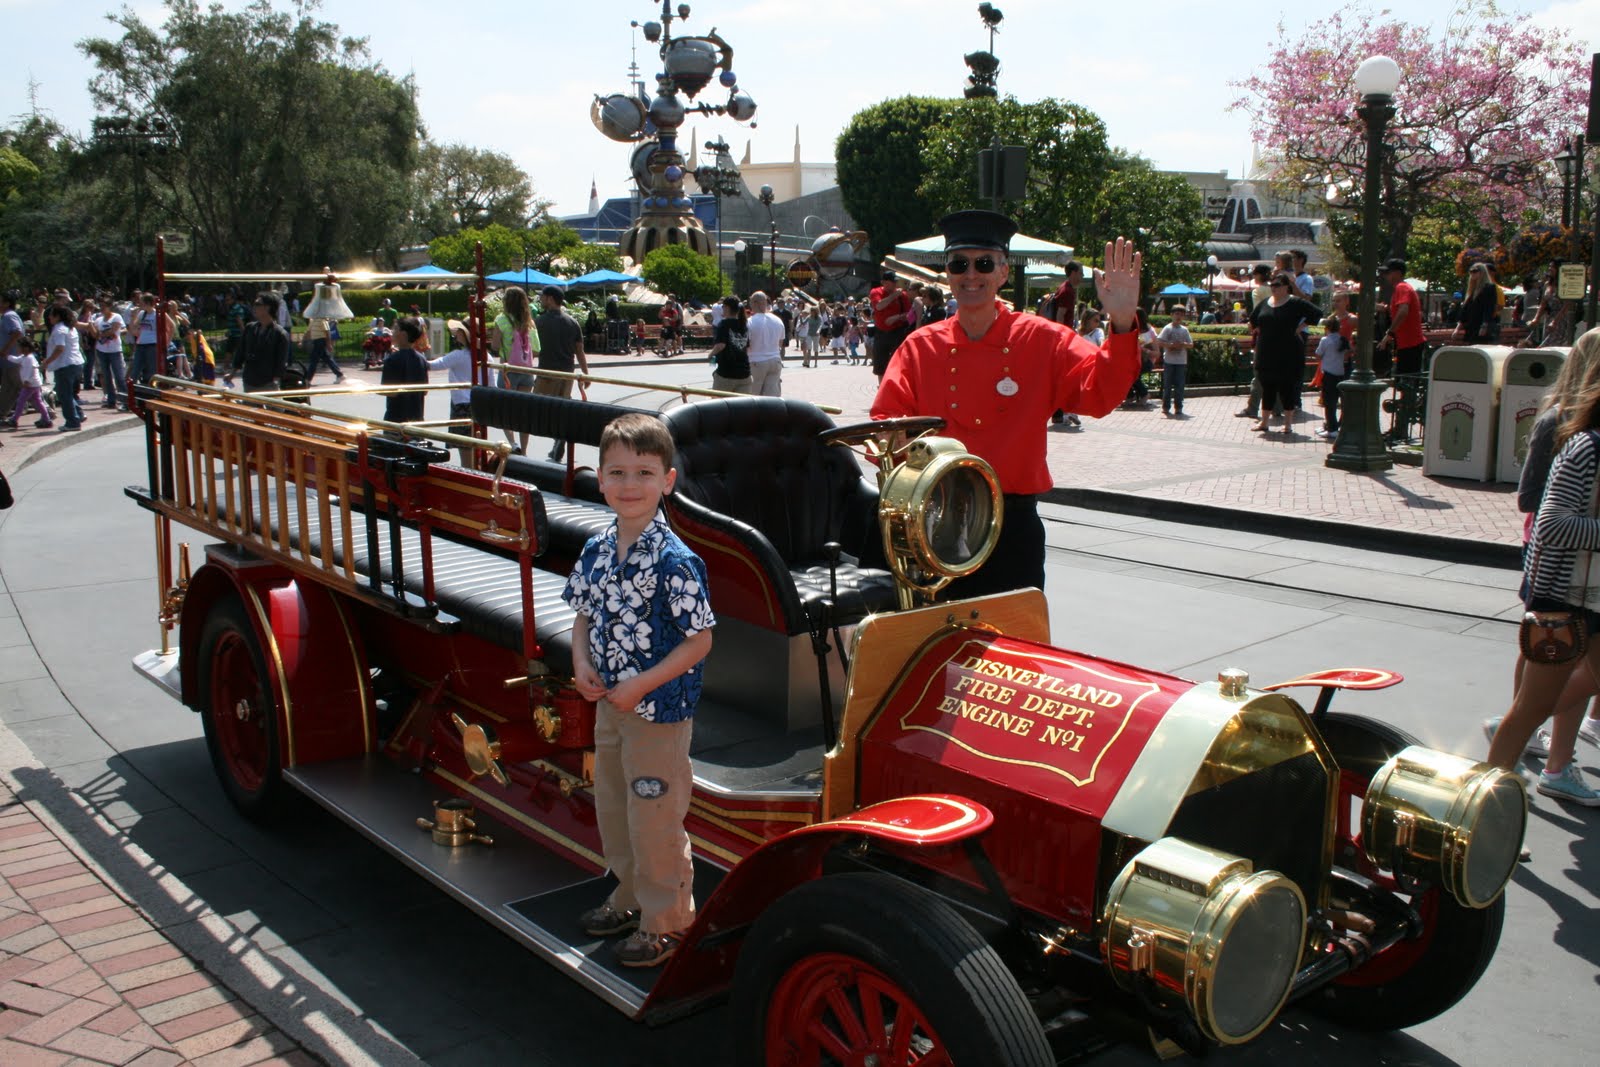 Disneyland Fire Truck